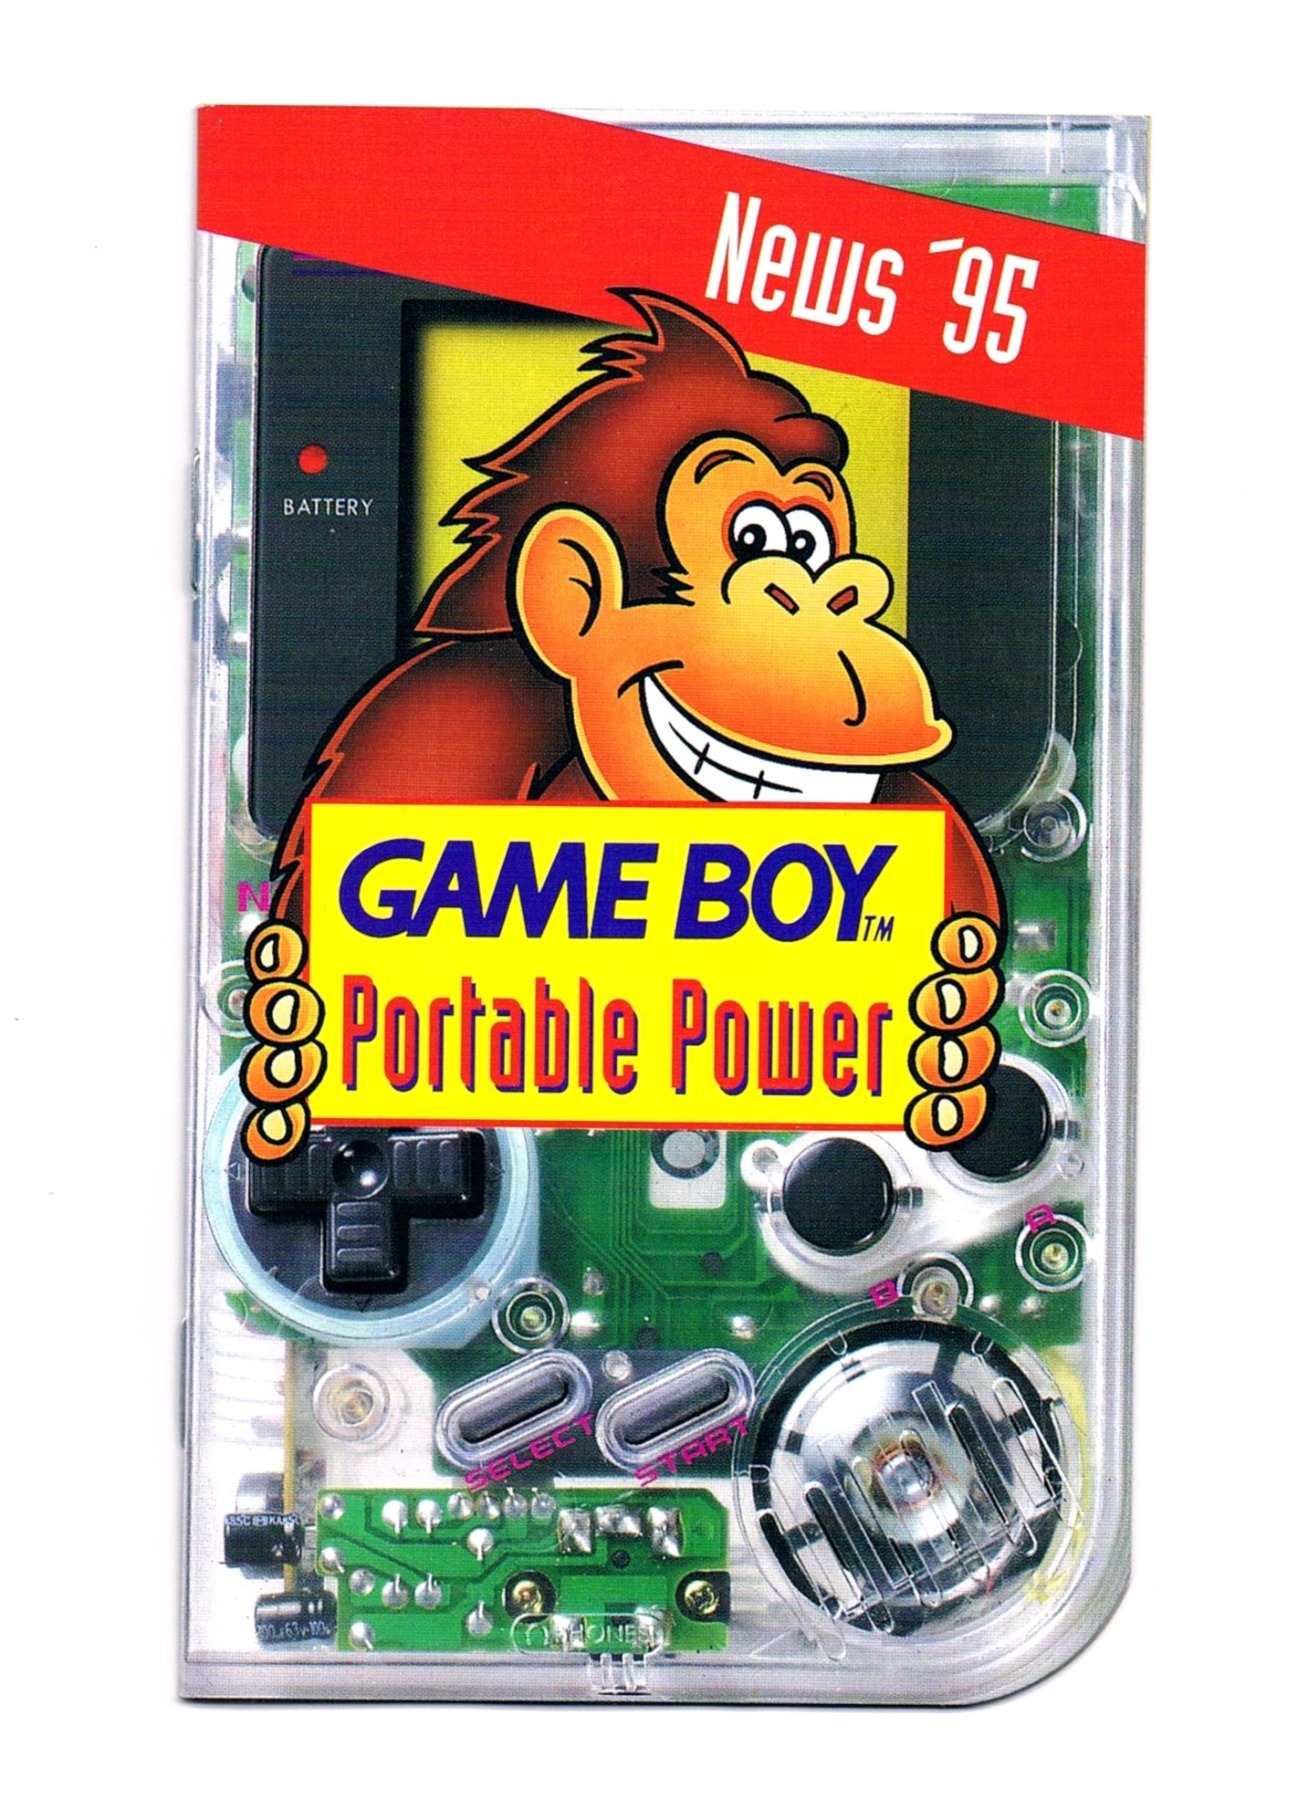 Game Boy Portable Power - News 95 - Mini Katalog 1995